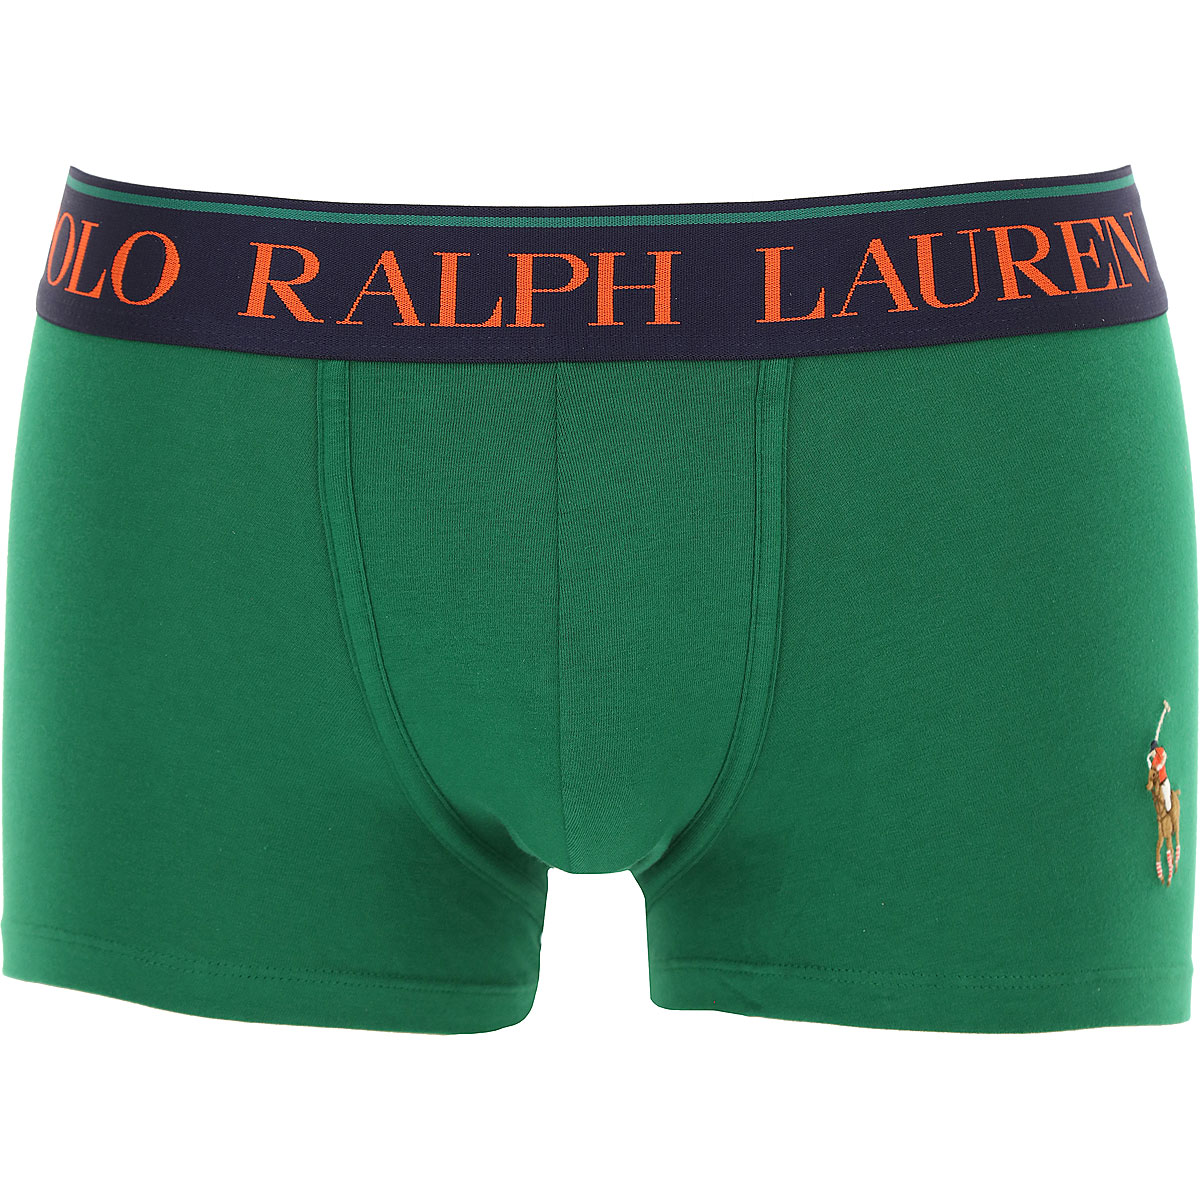 Mens Underwear Ralph Lauren, Style code: 714804198006--